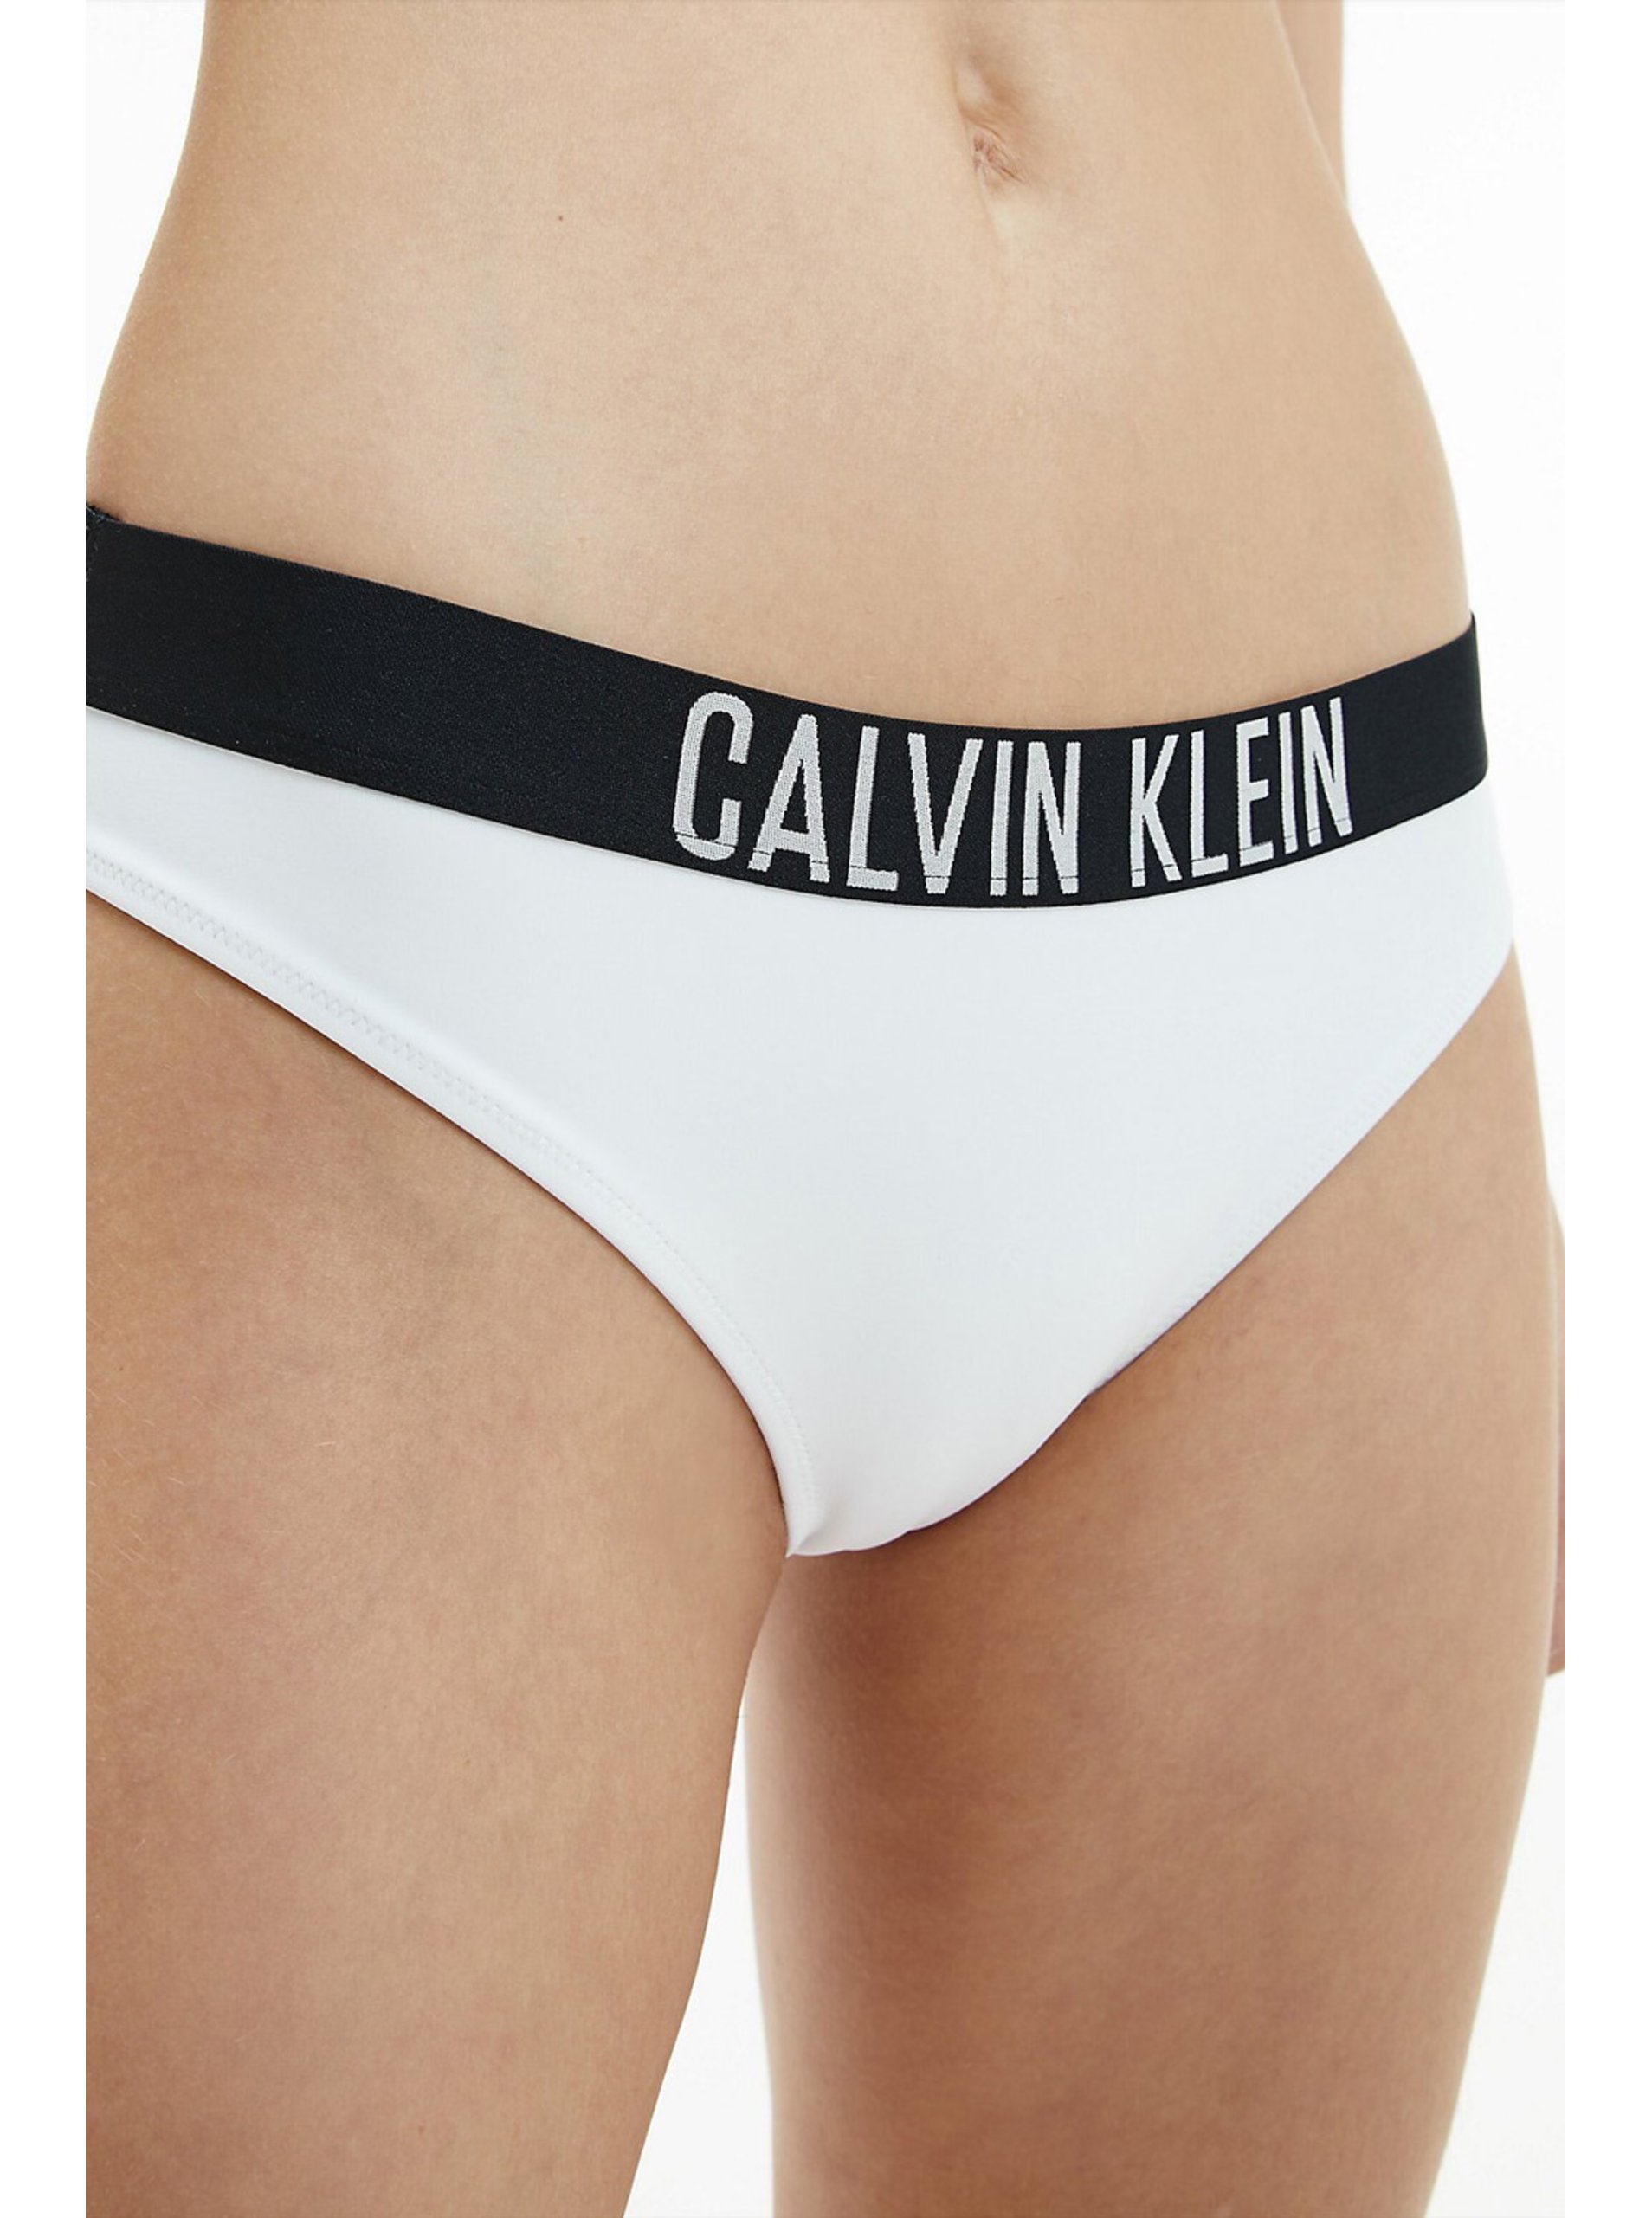 E-shop Calvin Klein biele spodný diel plaviek Classic Bikini